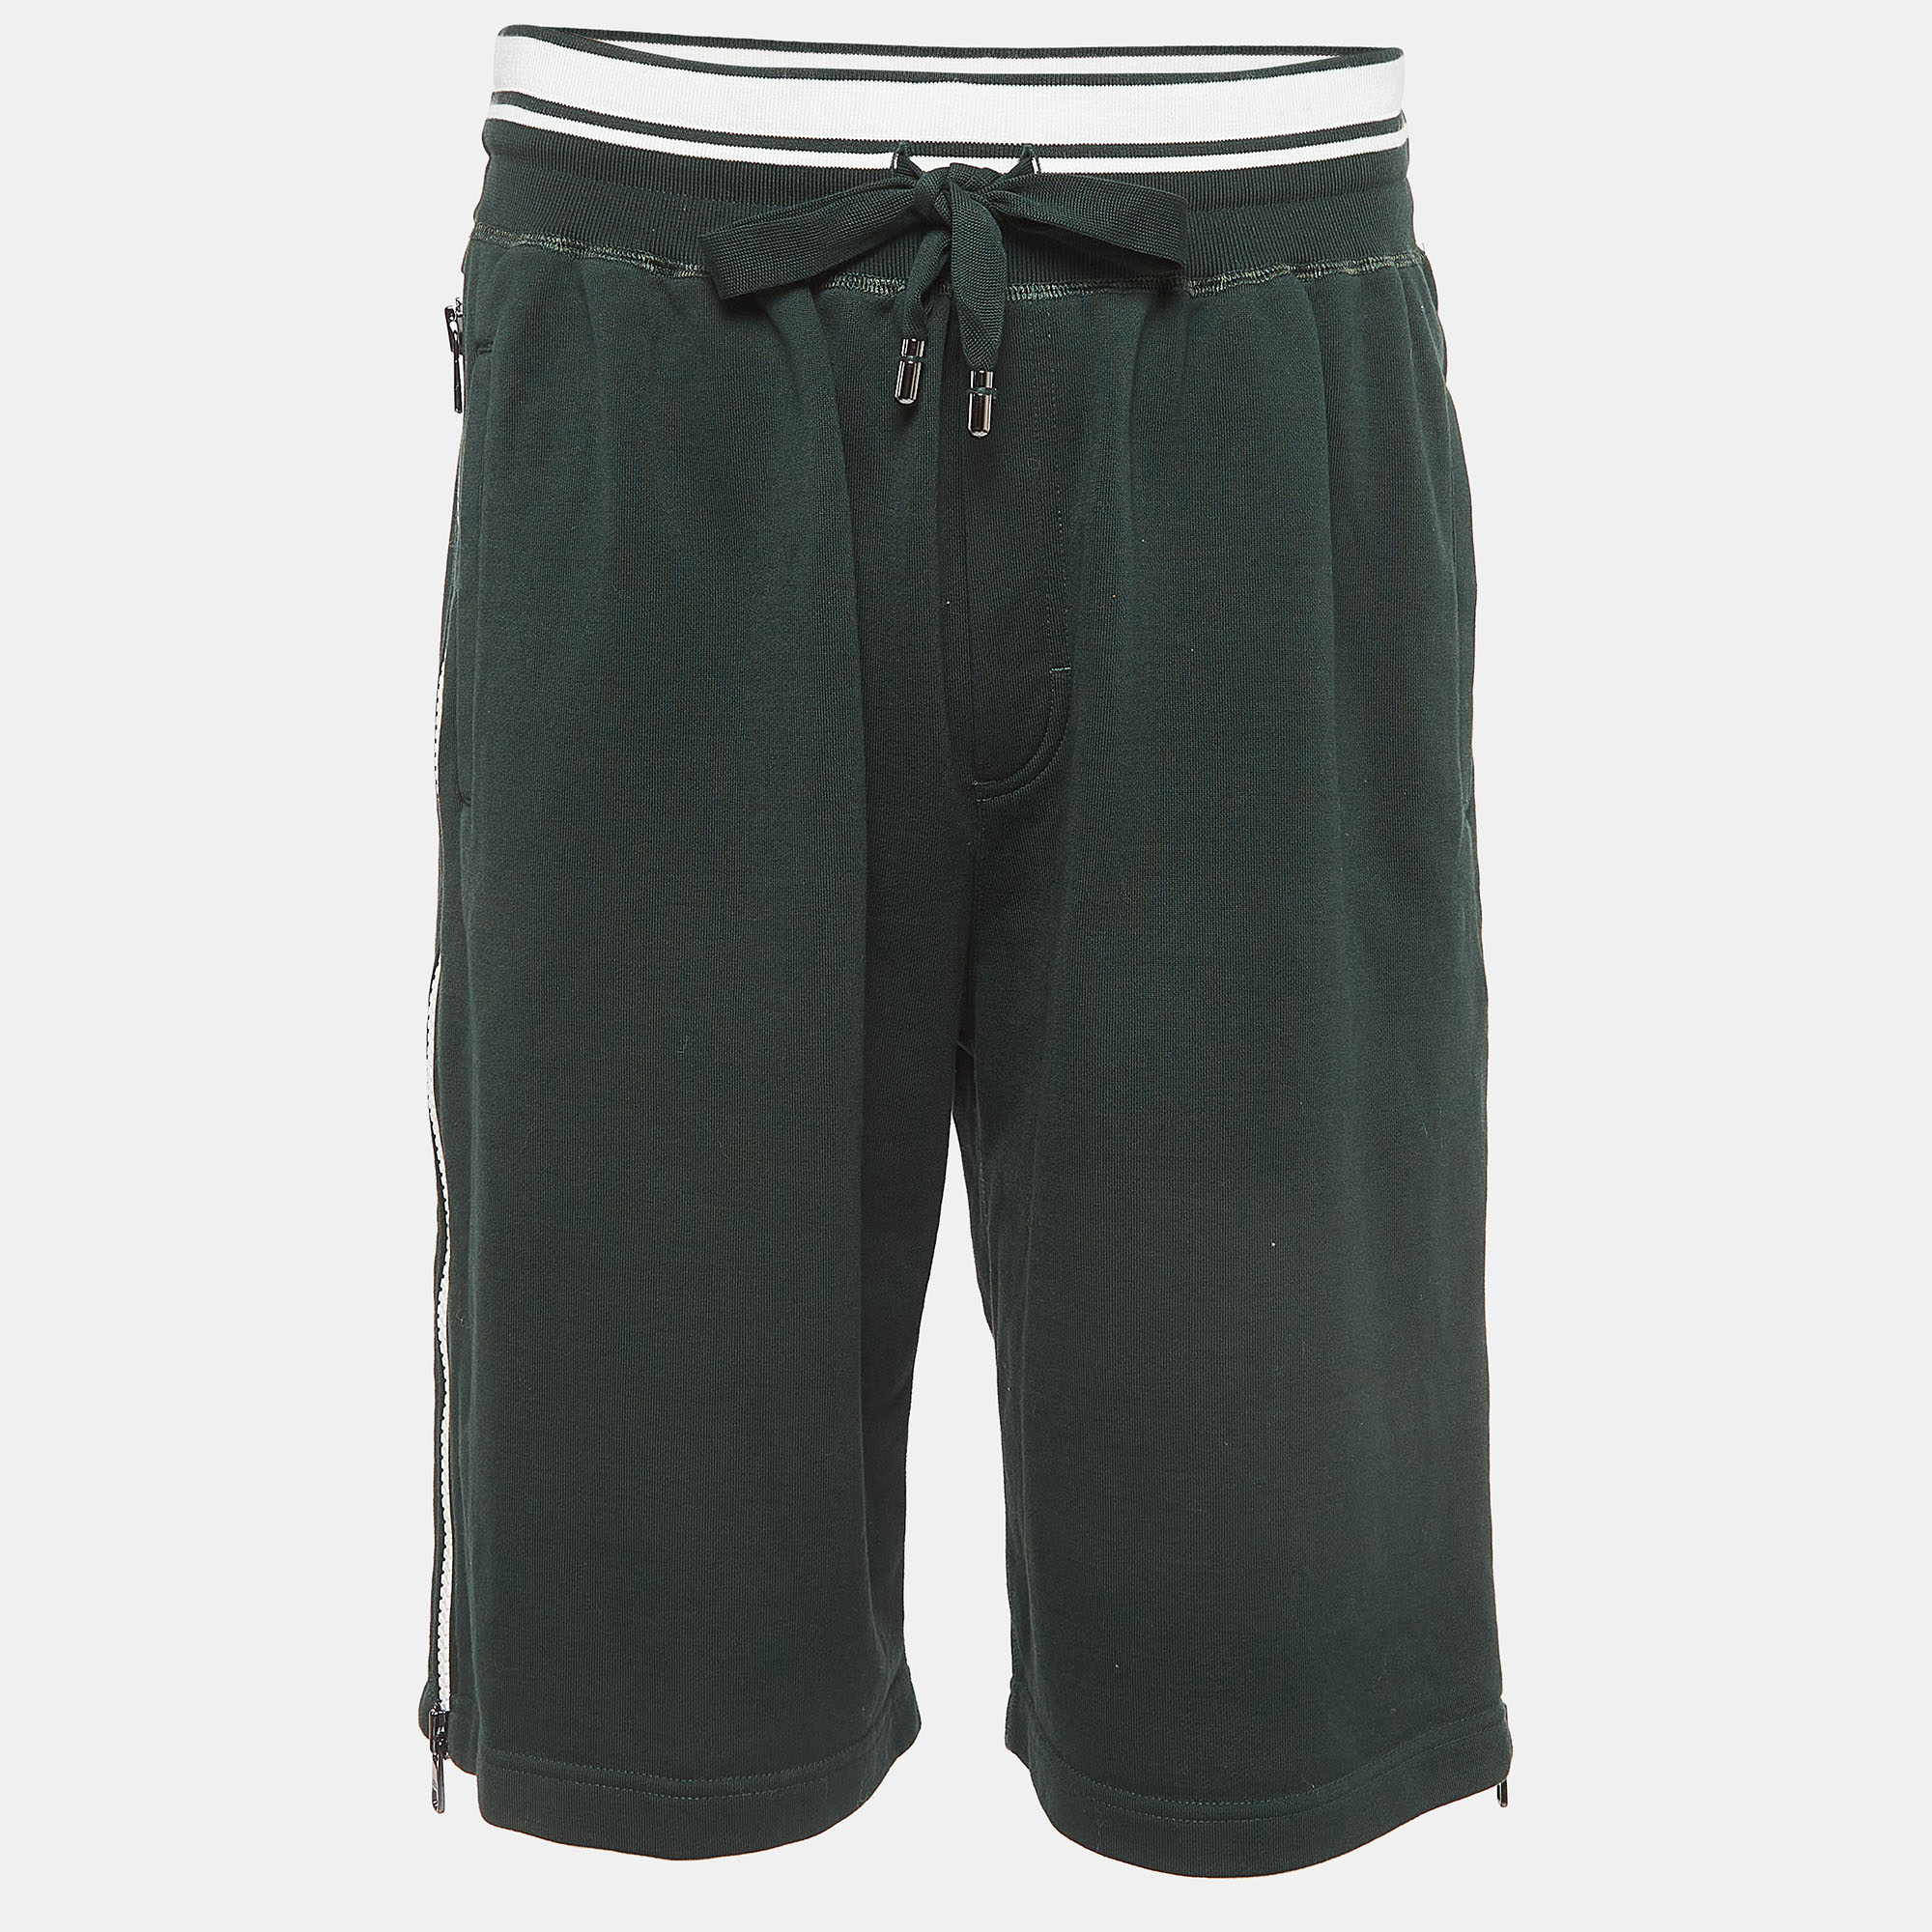 Dolce & gabbana dark green cotton blend knit drawstring shorts m